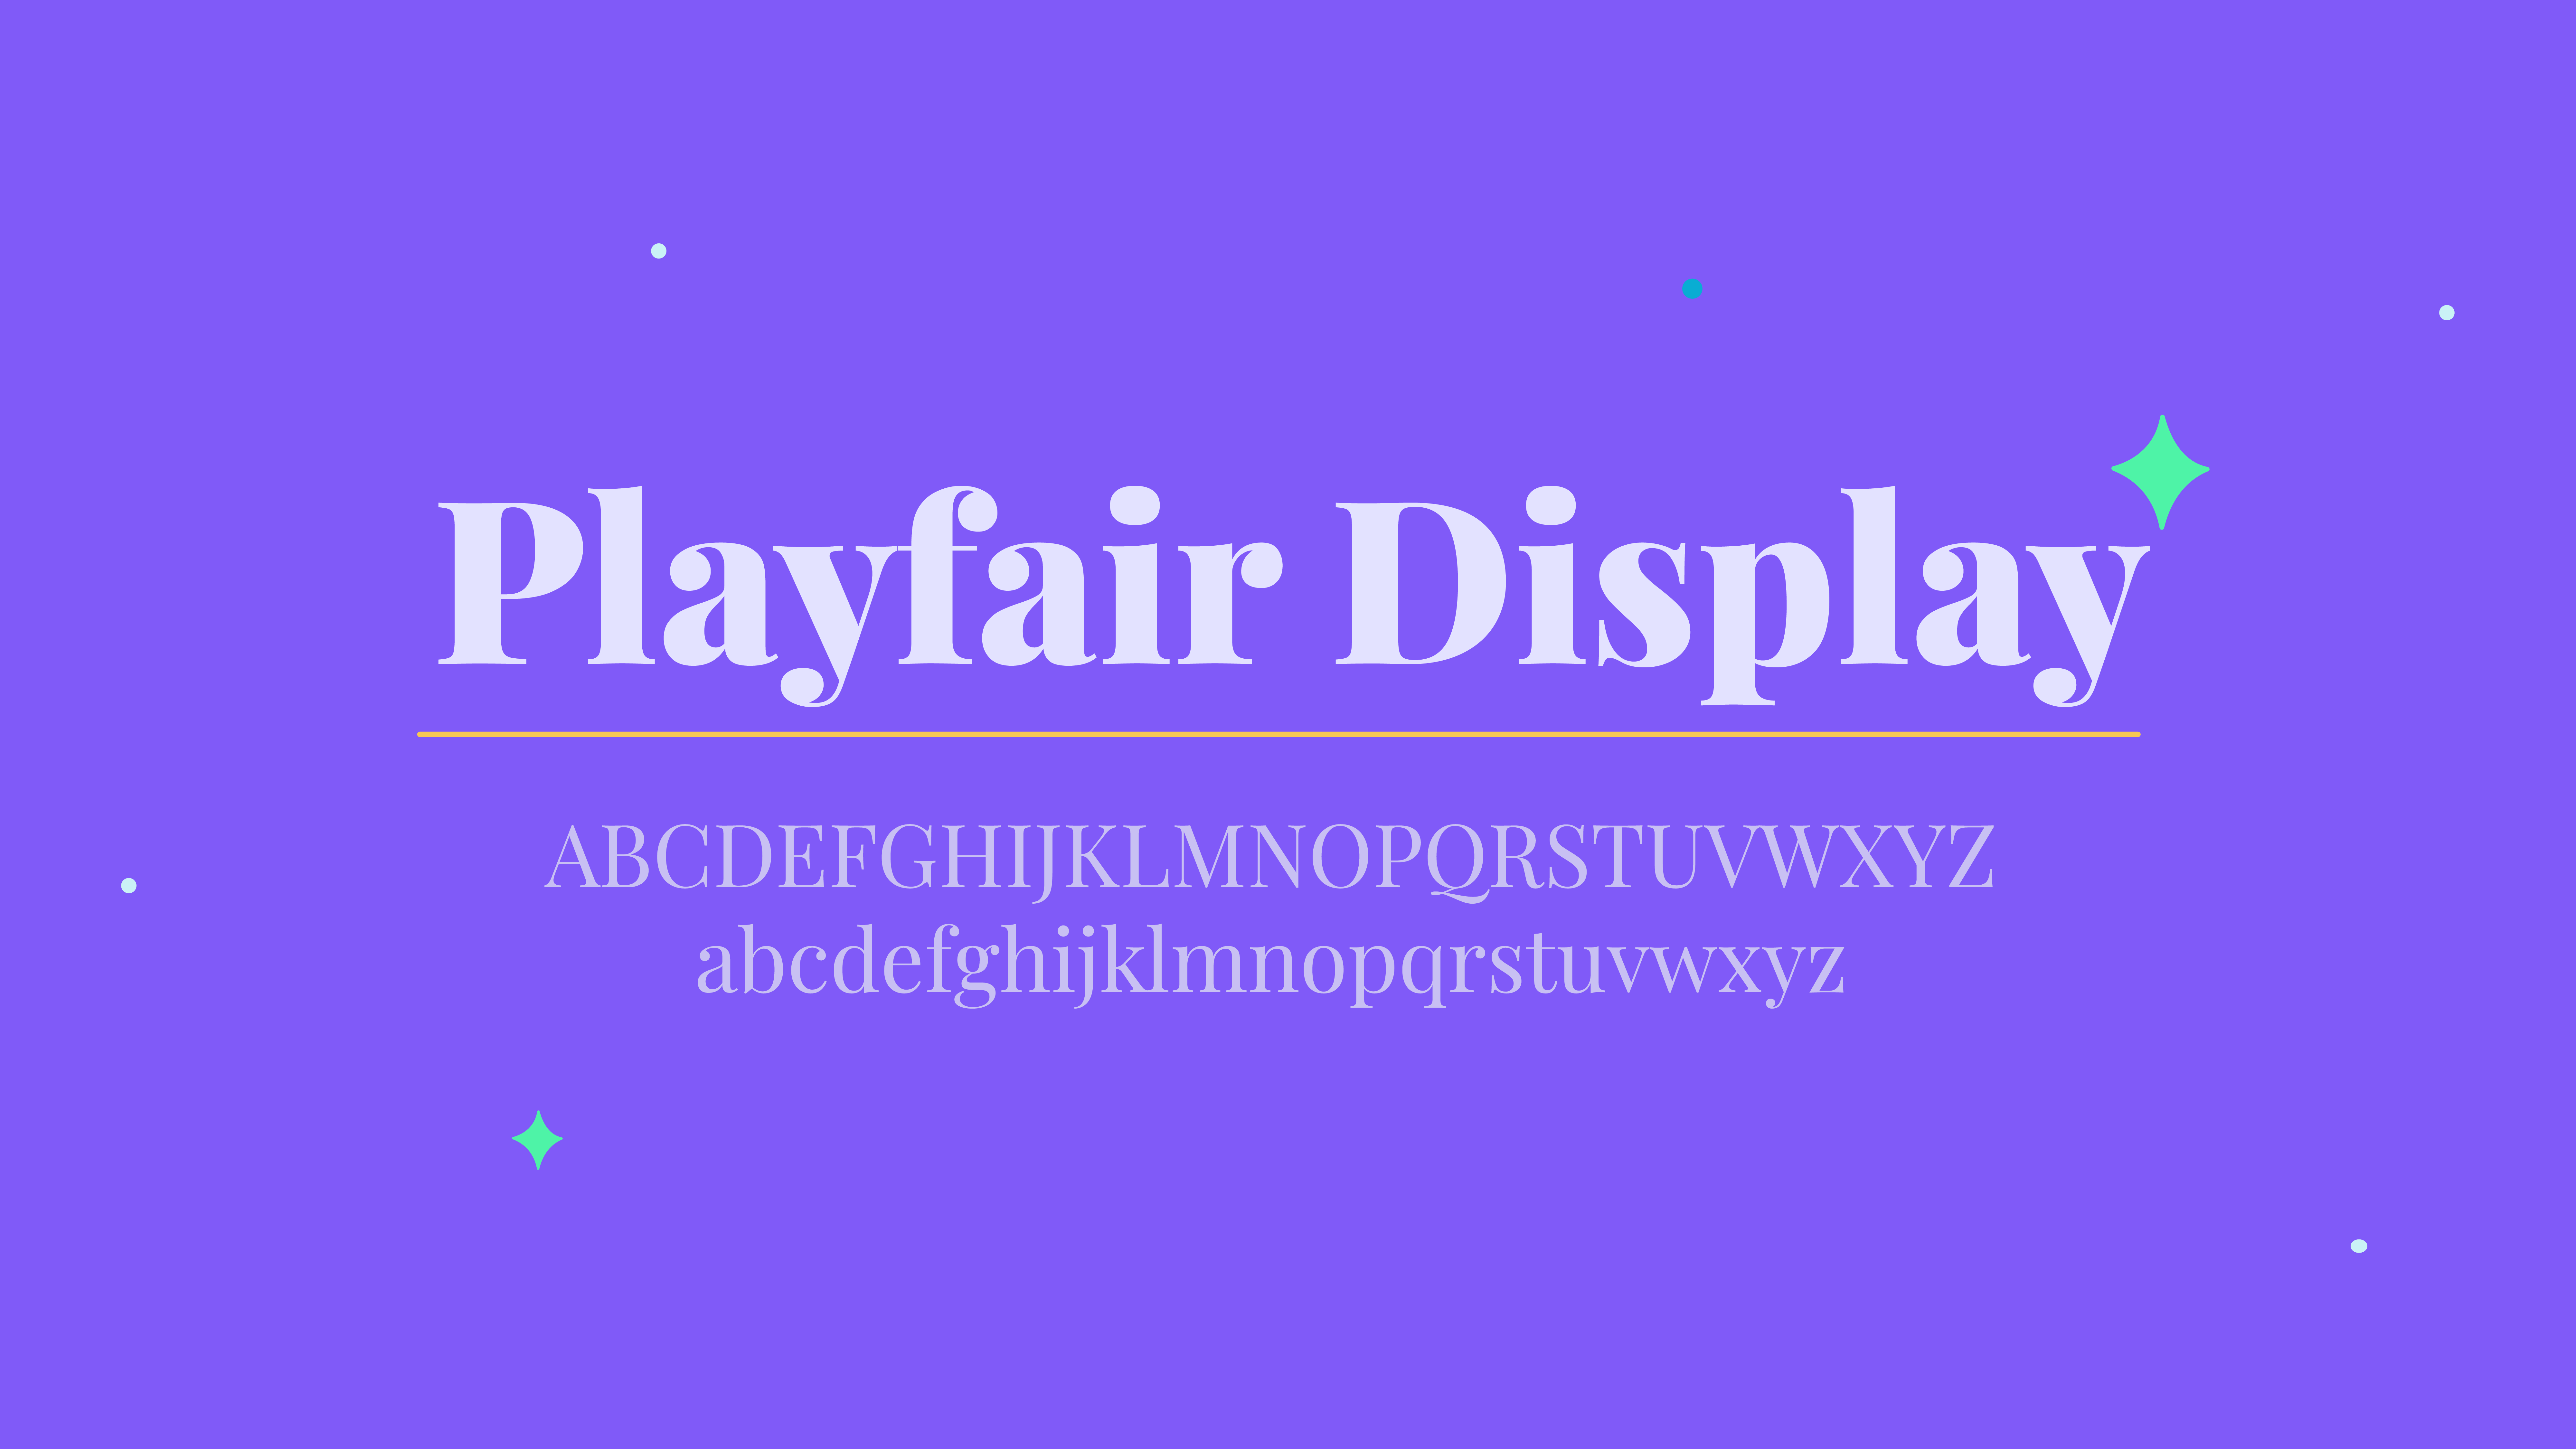 Playfair Display font